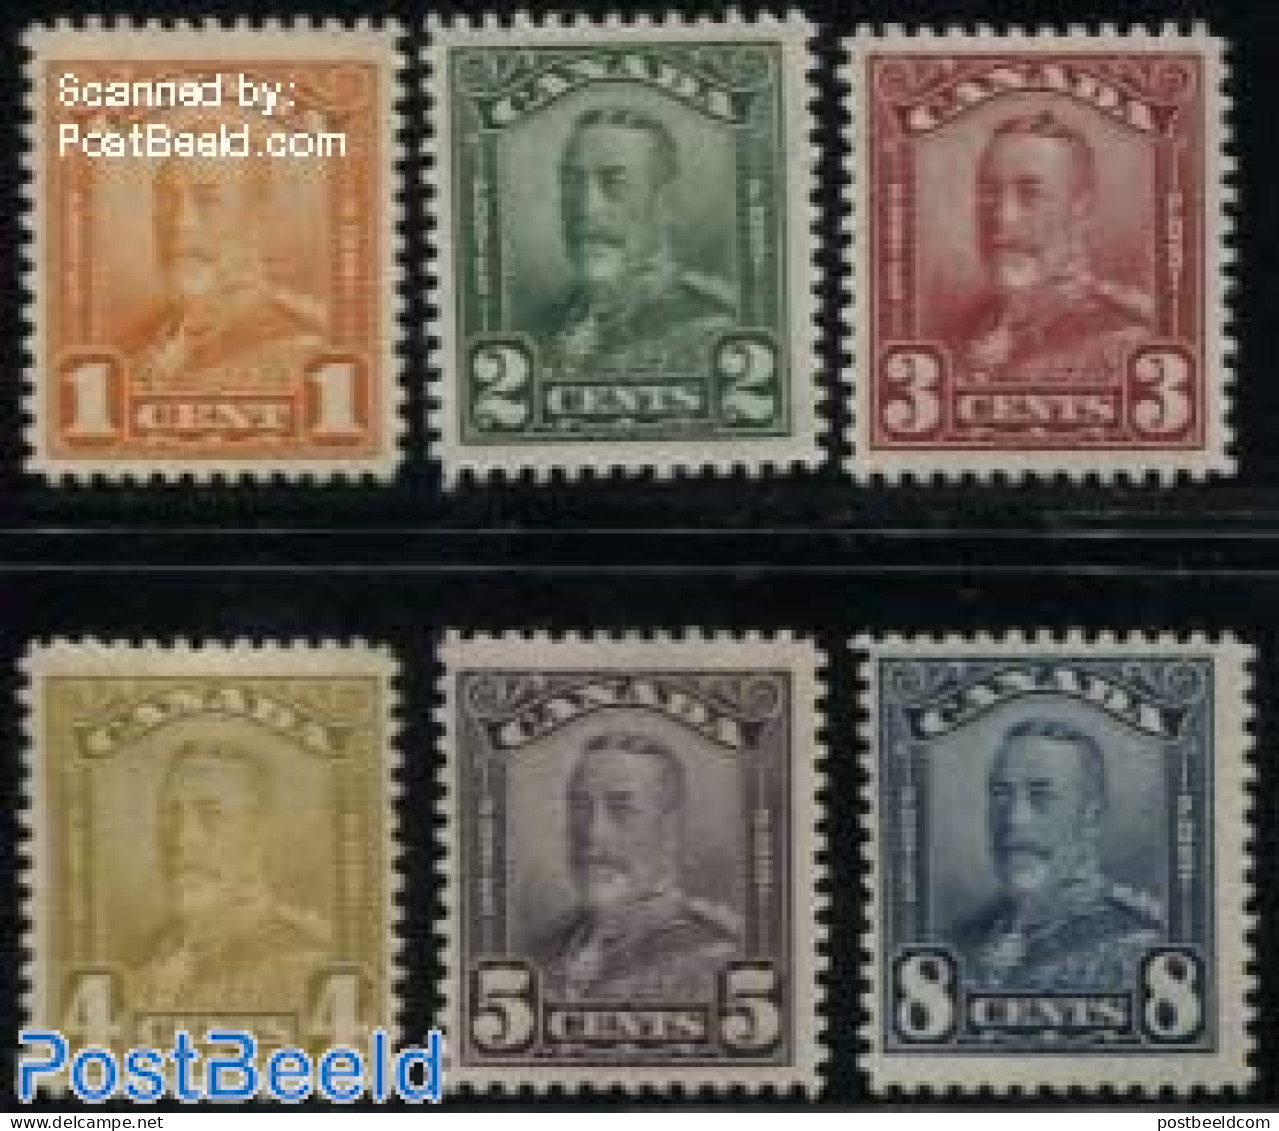 Canada 1928 Definitives 6v, Mint NH - Ungebraucht